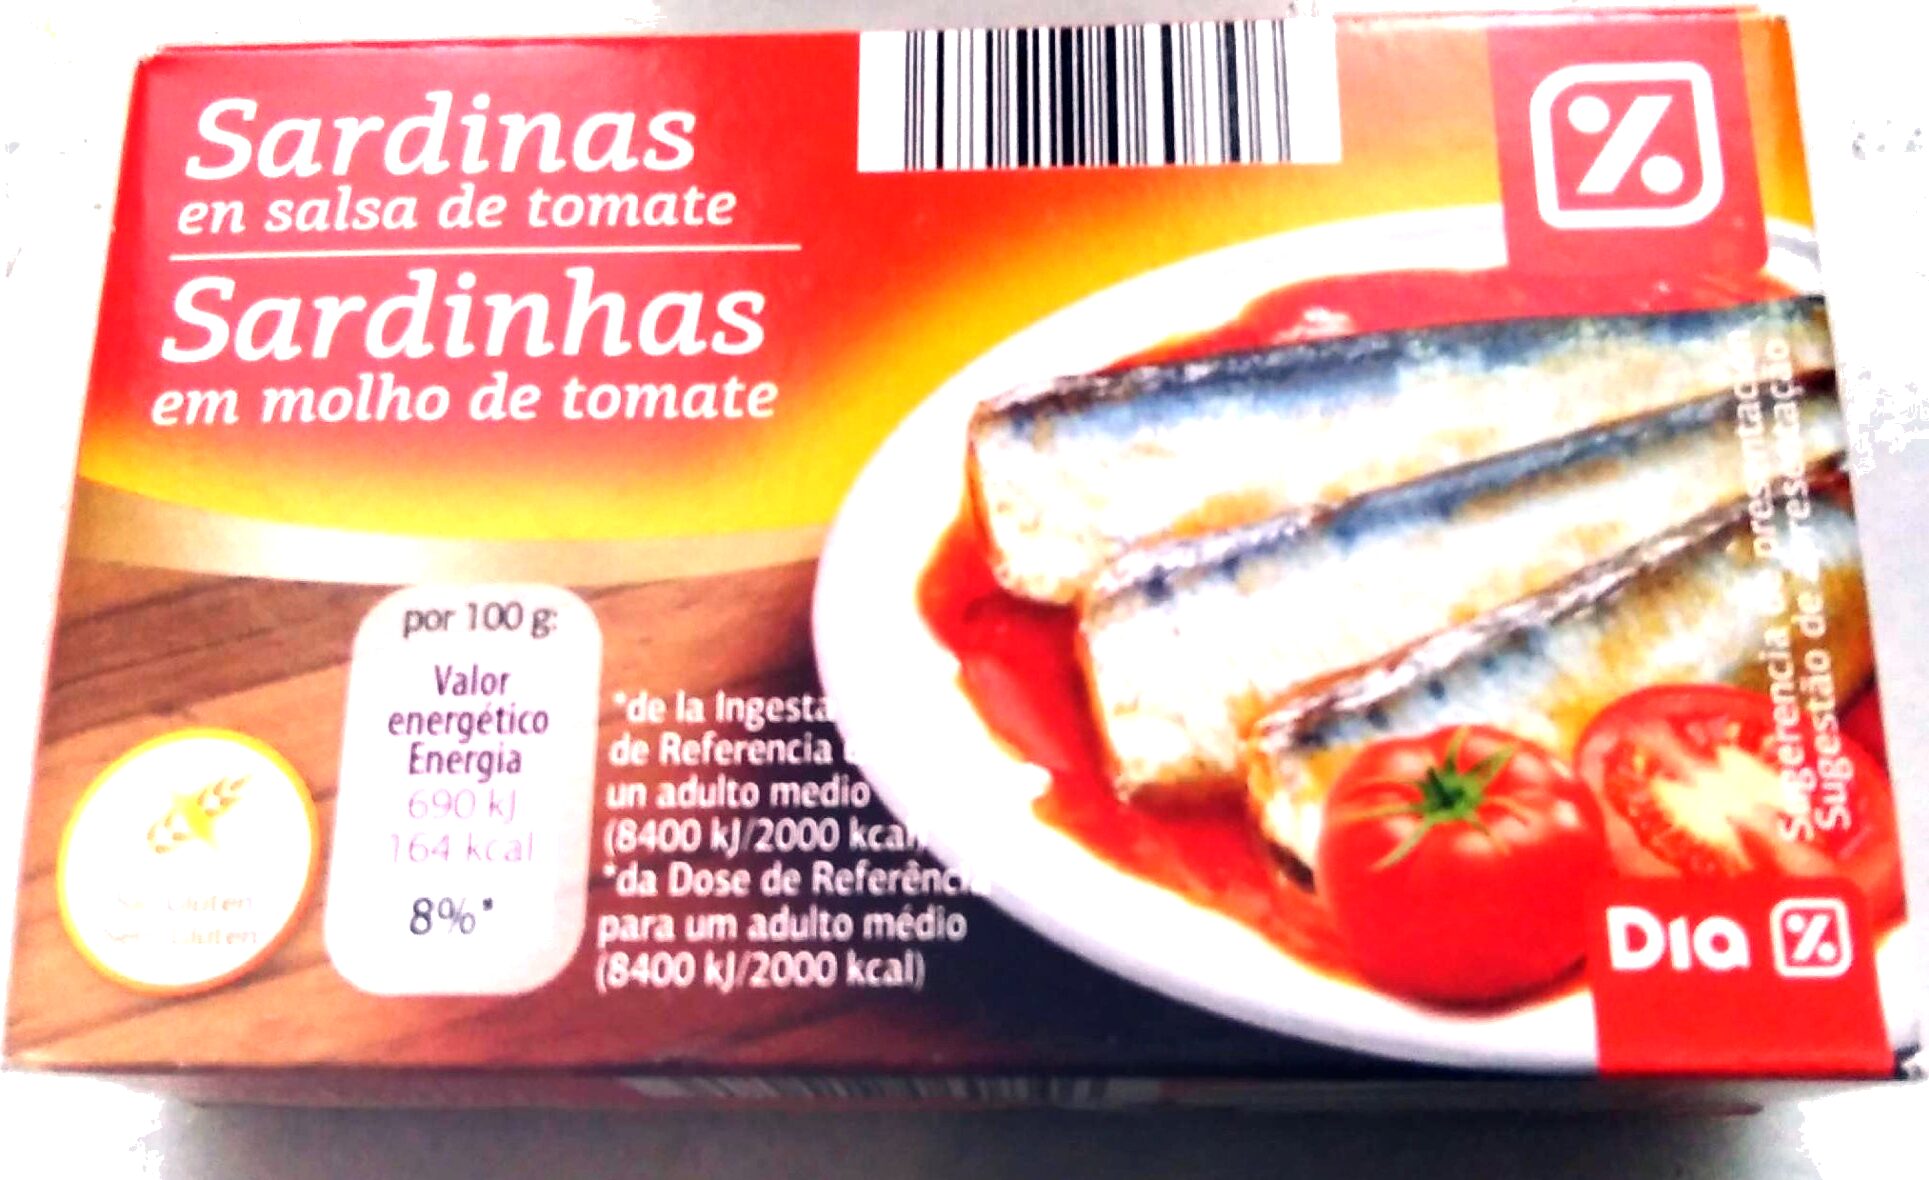 Sardinas en salsa de tomate - Product - es